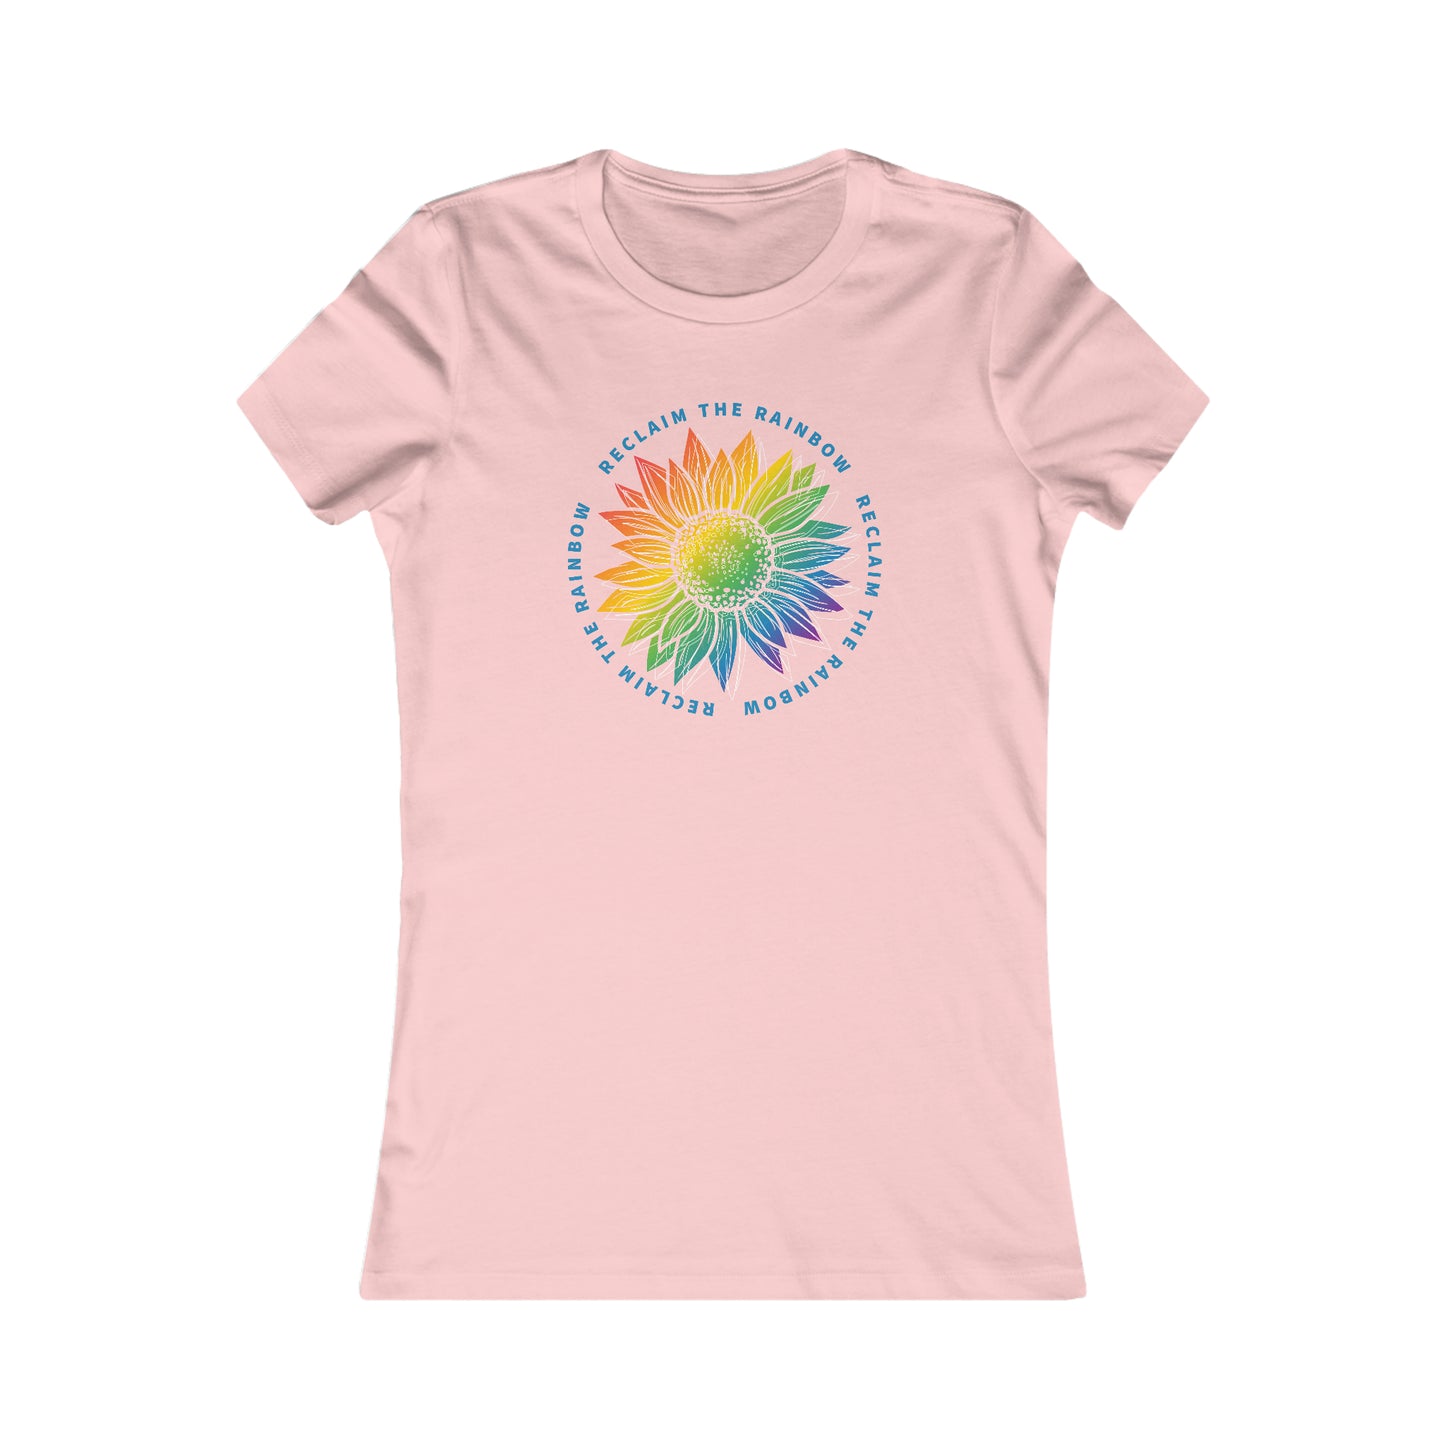 Reclaim The Rainbow T-Shirt For Take Back The Rainbow TShirt For Rainbow T Shirt For Spiritual Shirt For Sunflower Tee For Genesis 9:17 Shirt For Christian Shirt